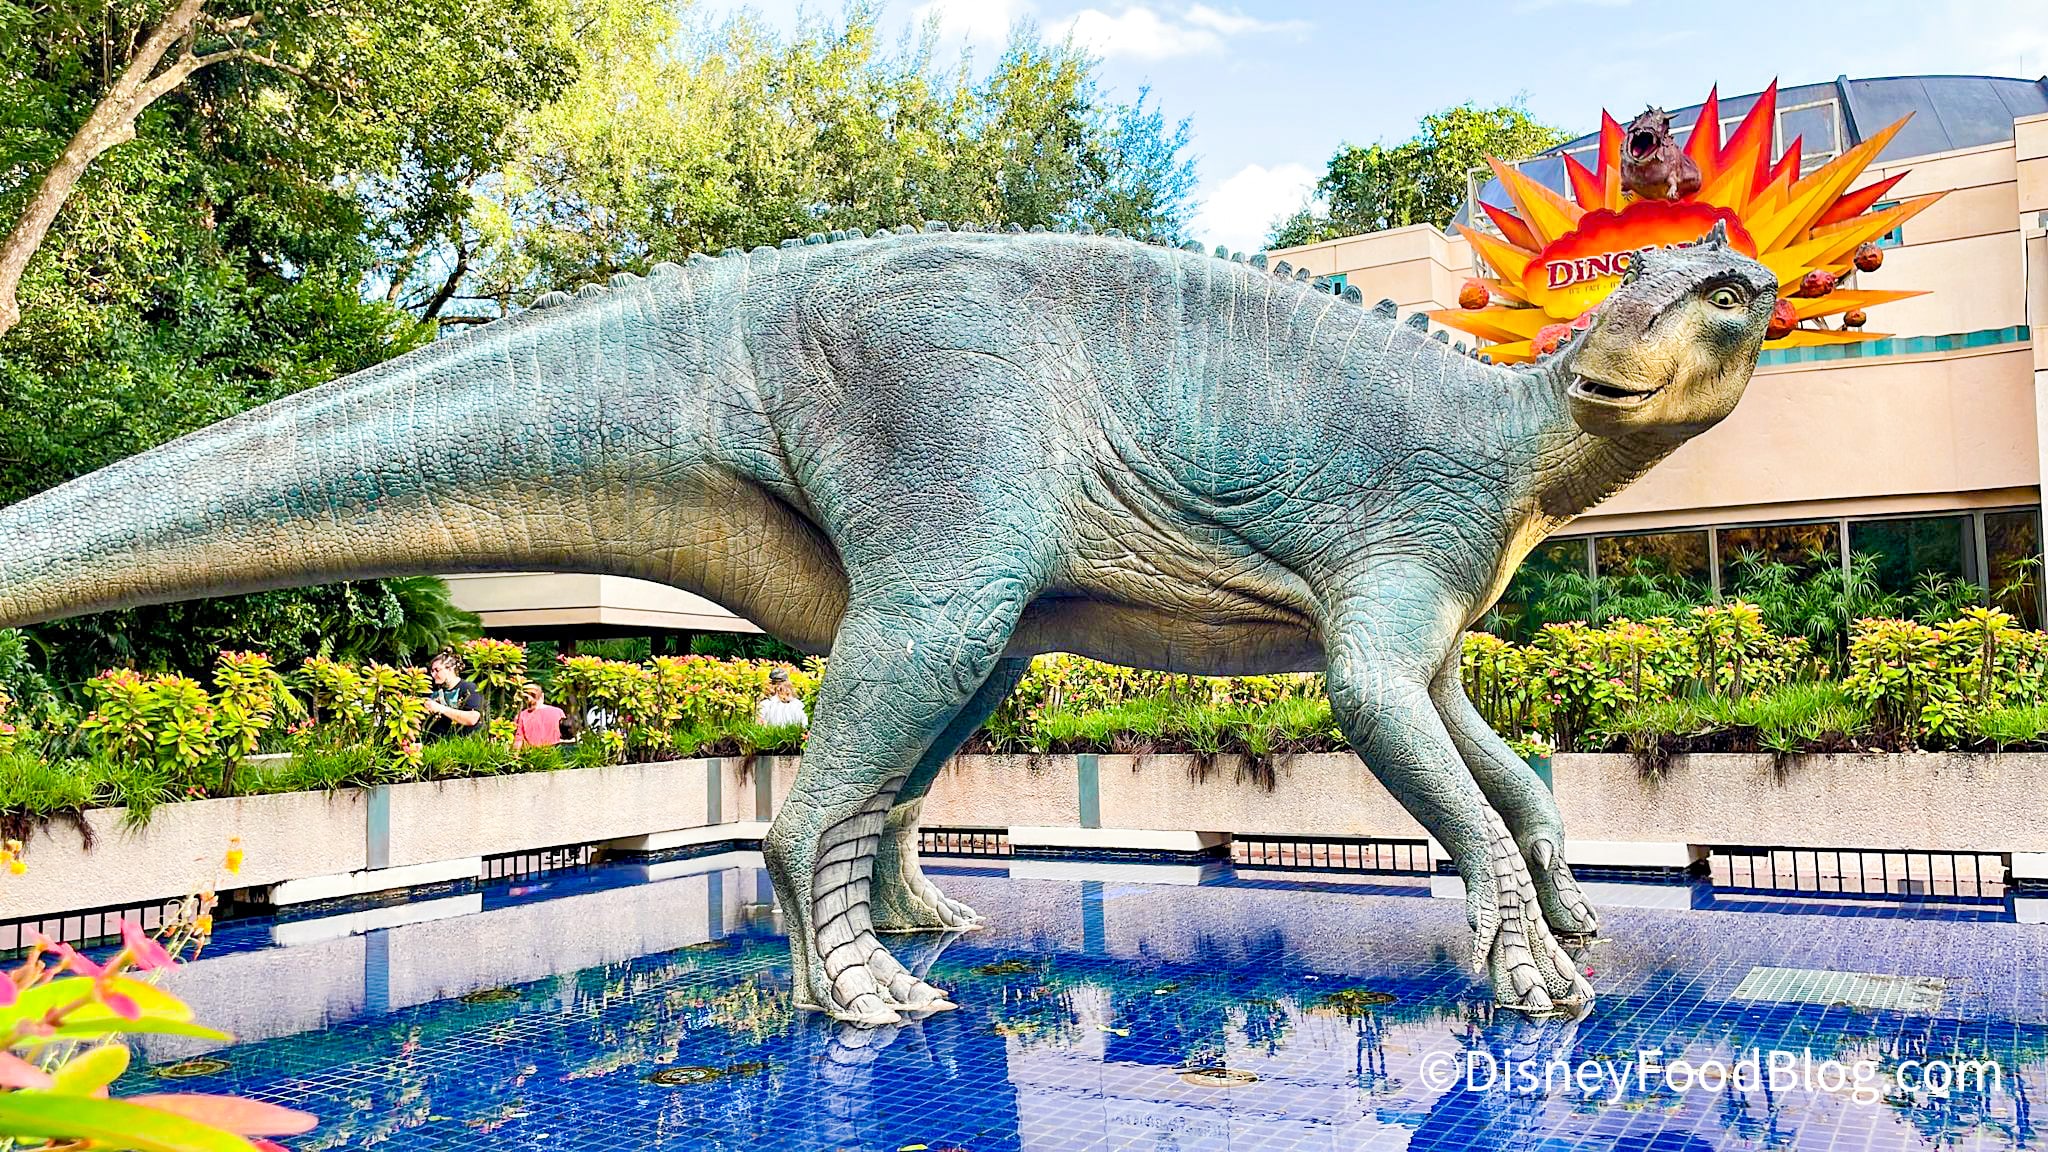 The Delightful Dinosaurs of Disney World - Disney Tourist Blog